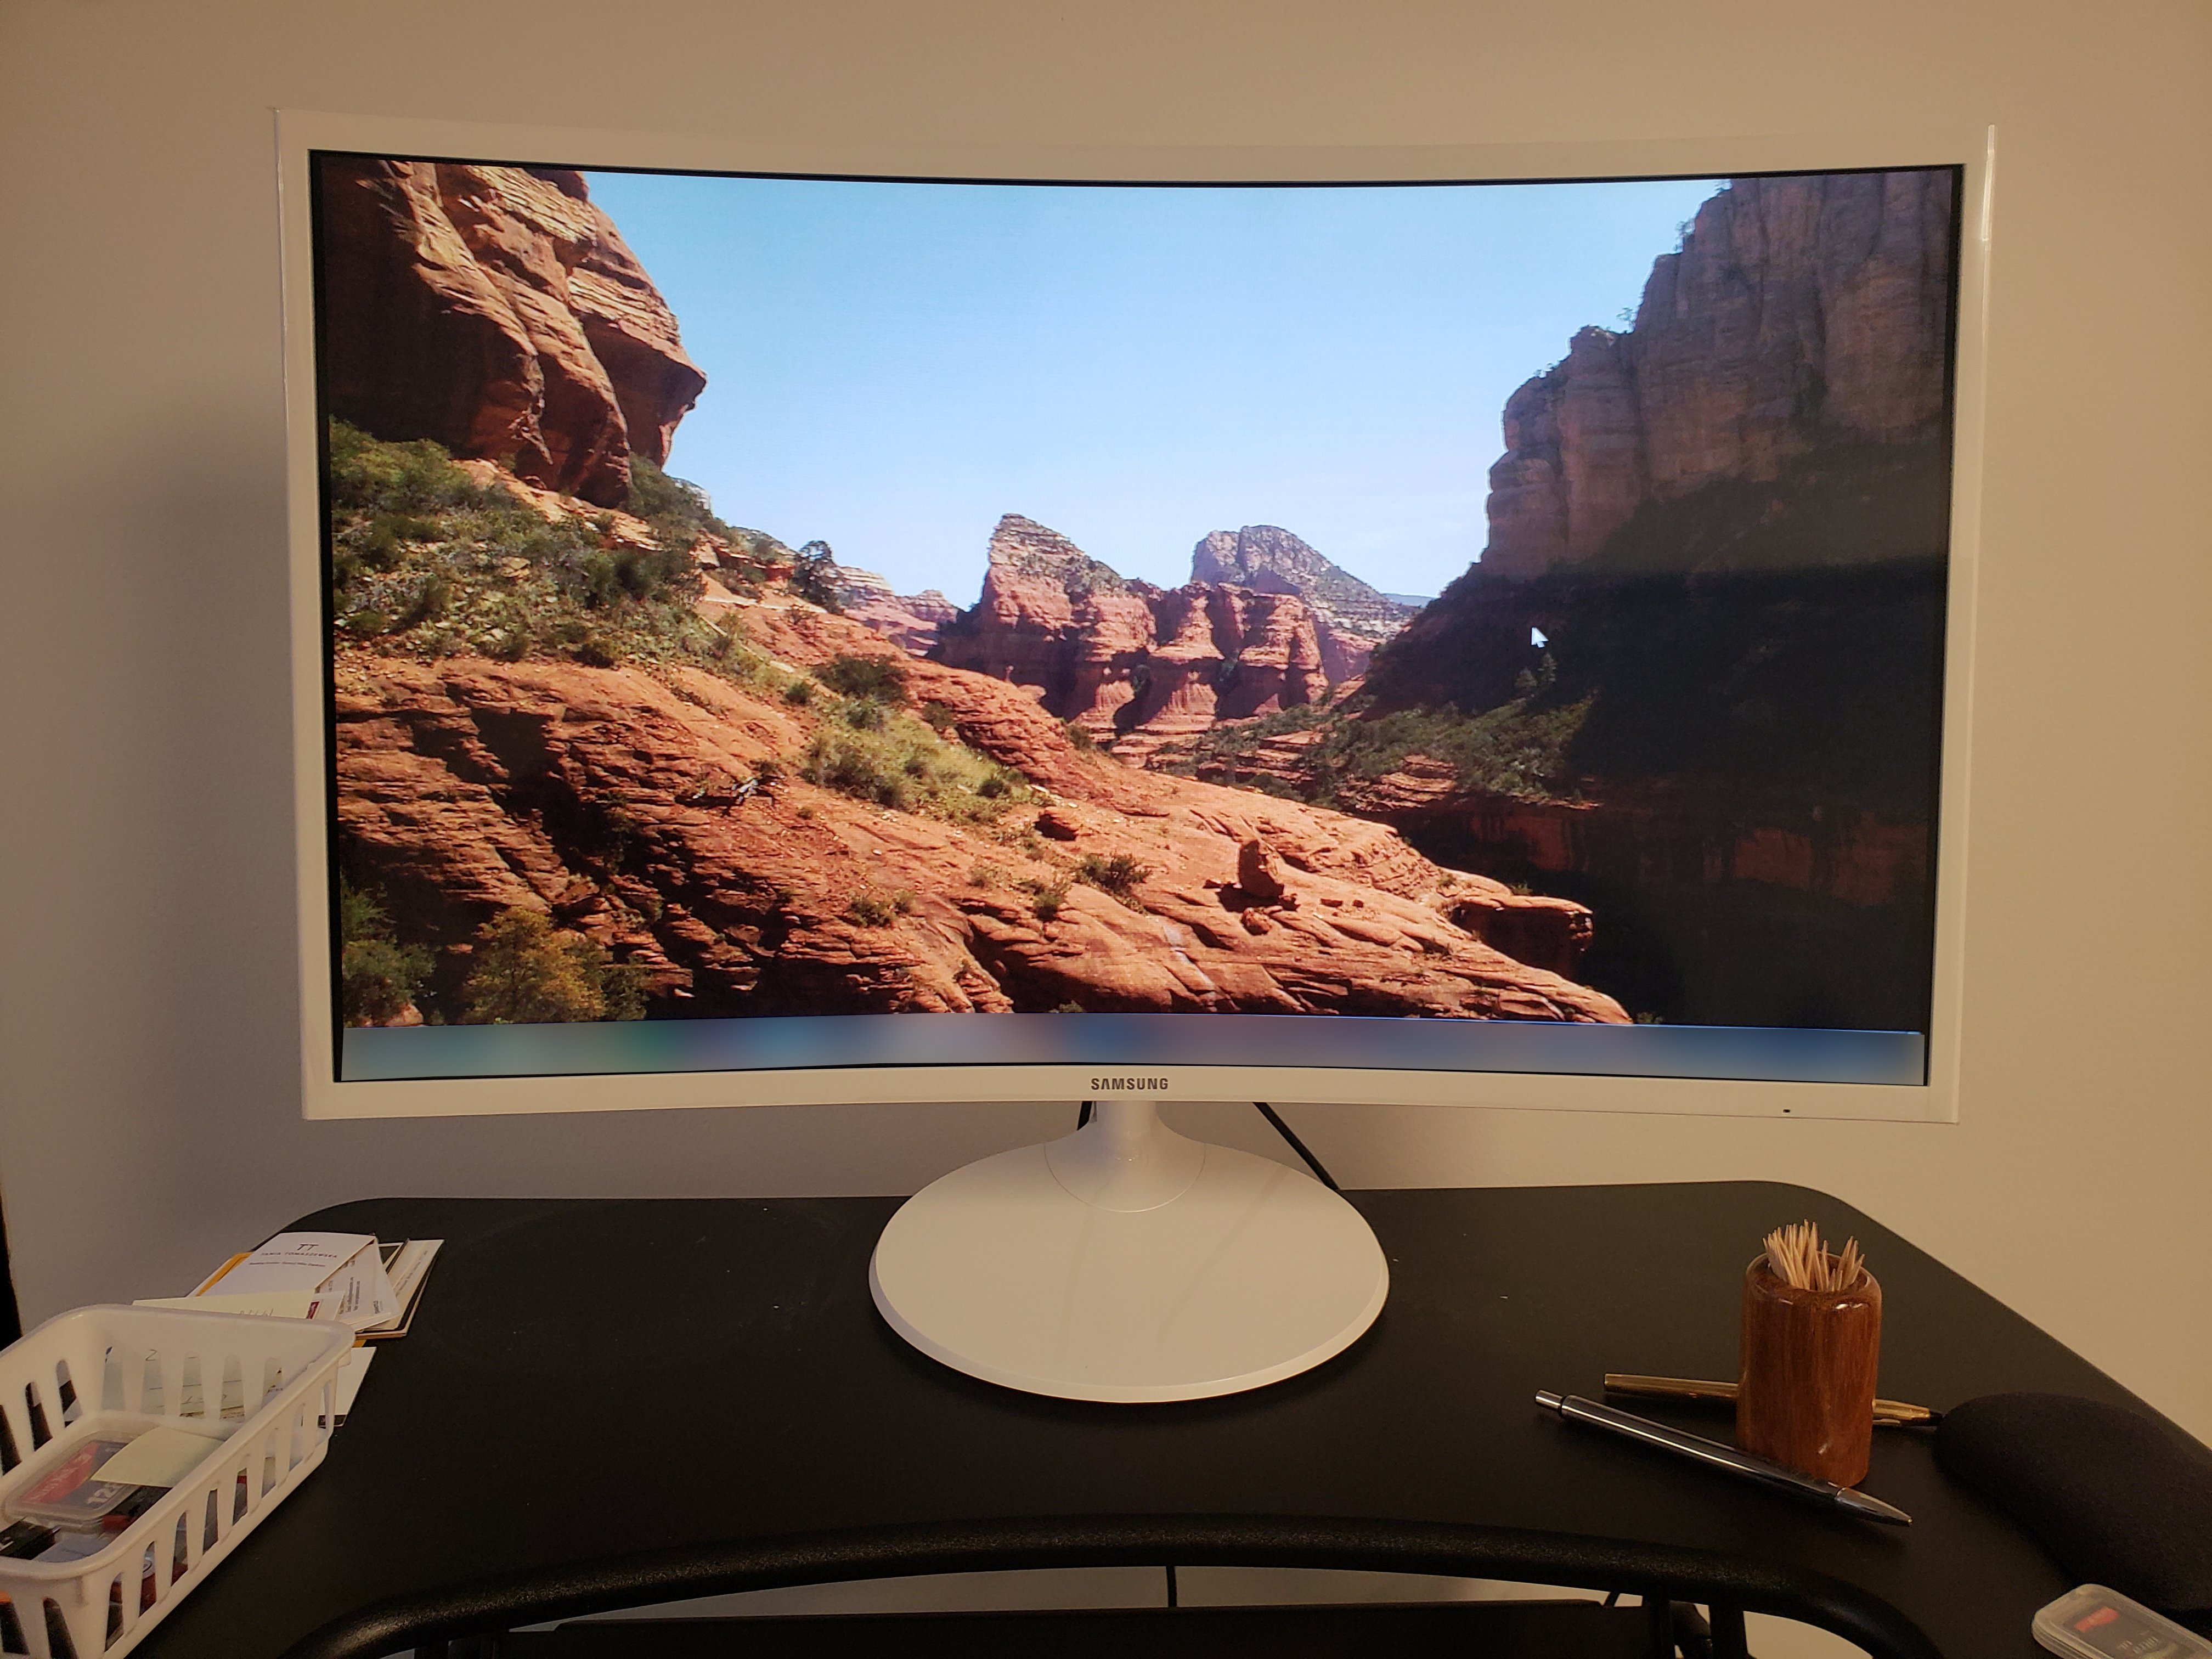 brand new curved monitor setup